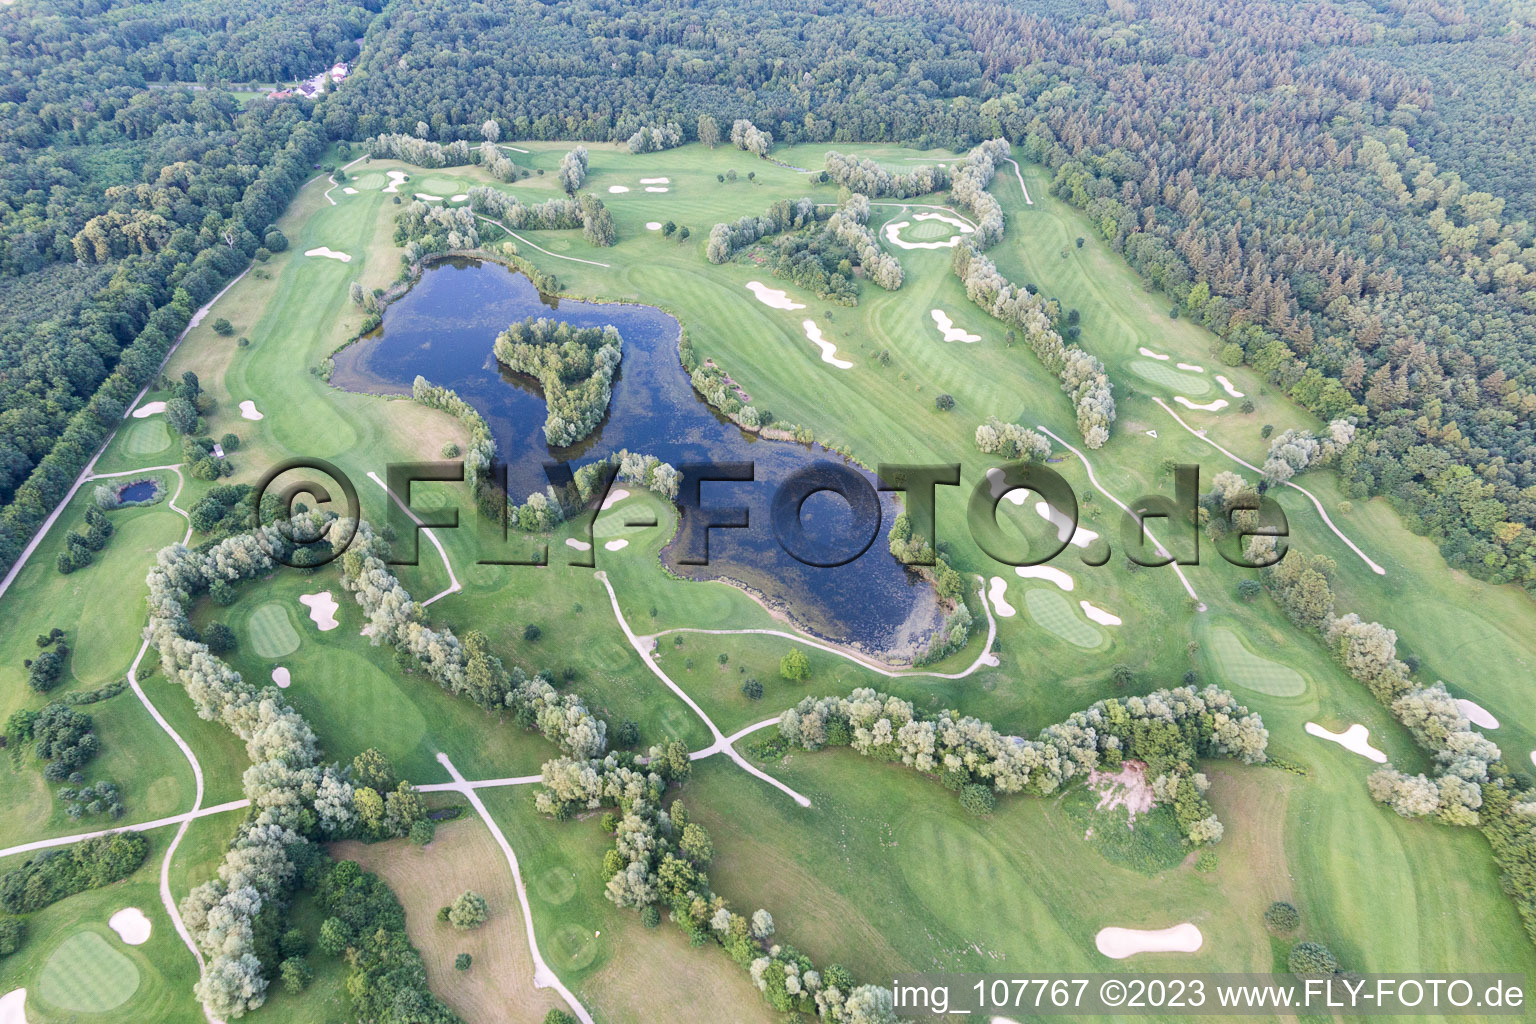 Golf Dreihof in Essingen in the state Rhineland-Palatinate, Germany